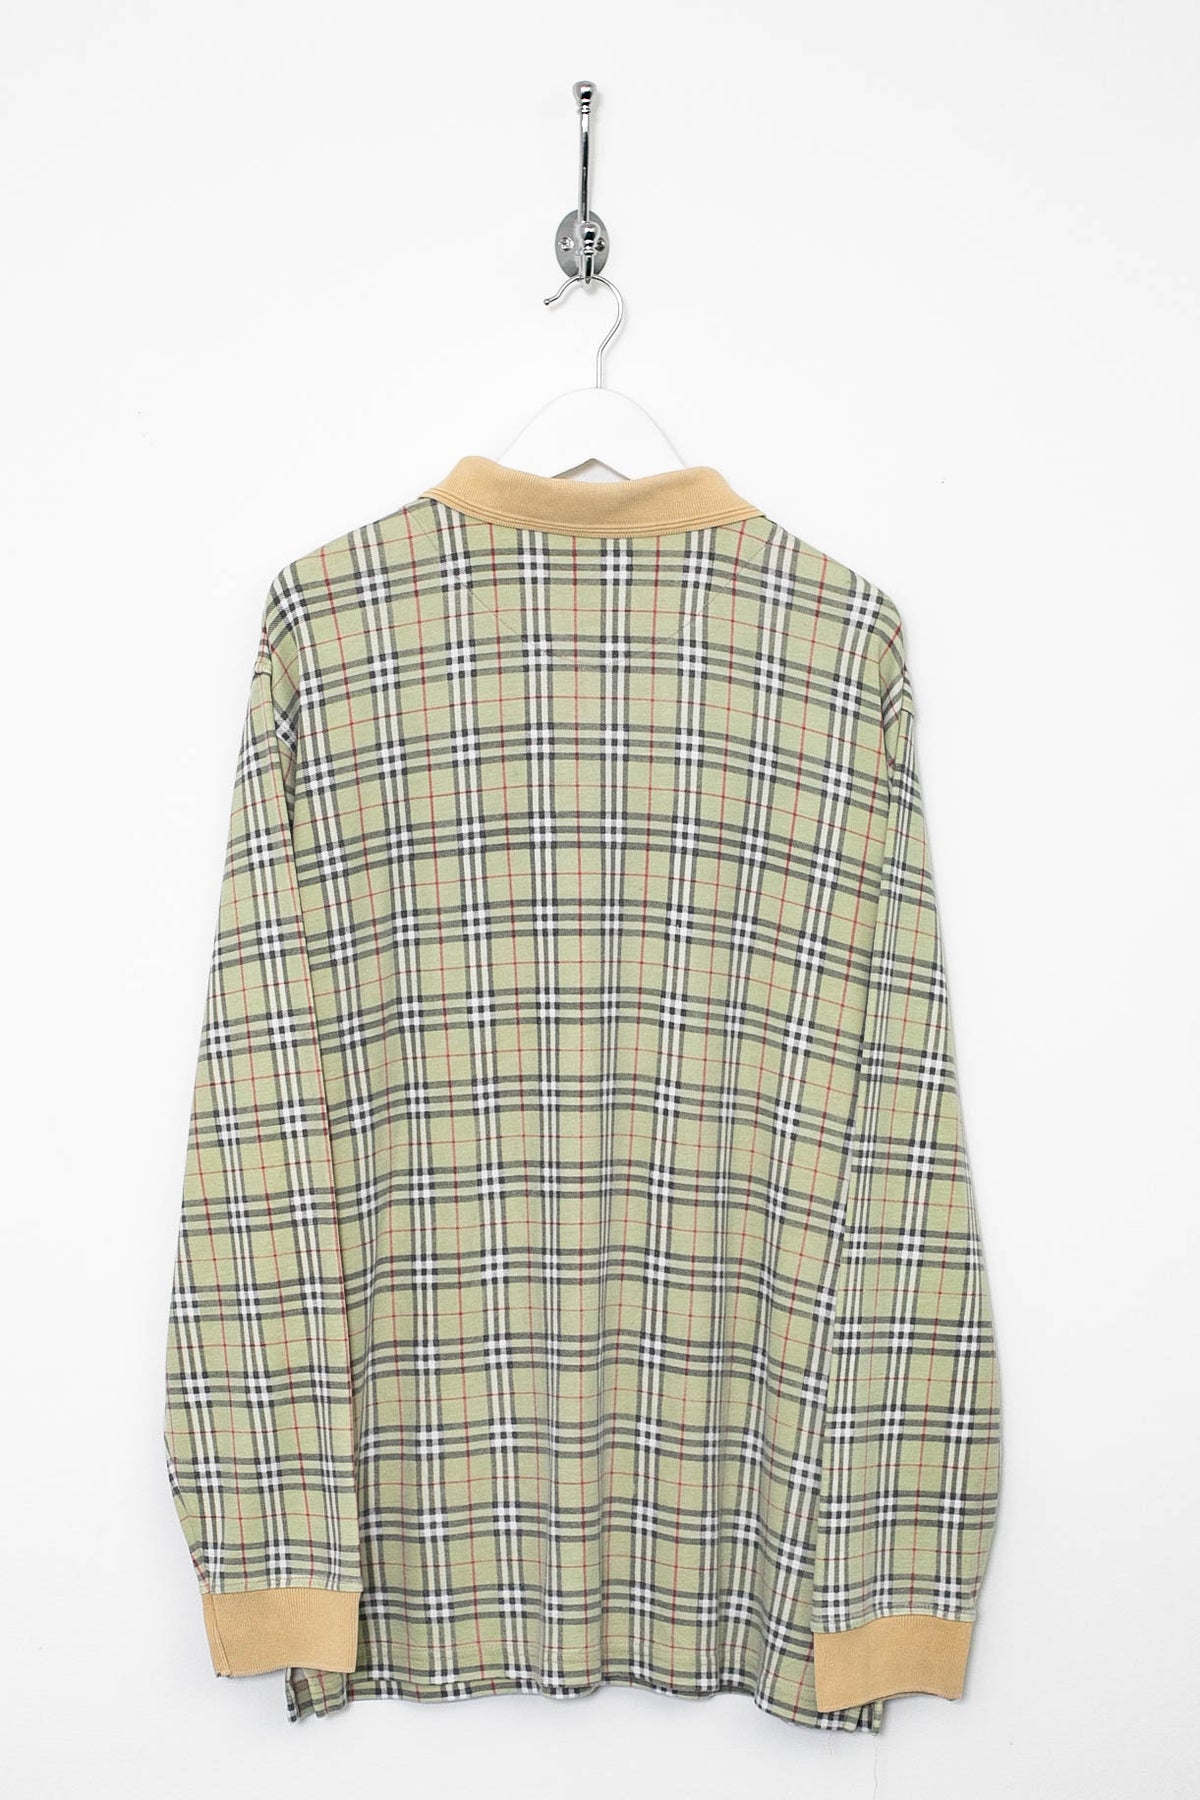 90s Burberry Long Sleeve Polo Shirt (M)